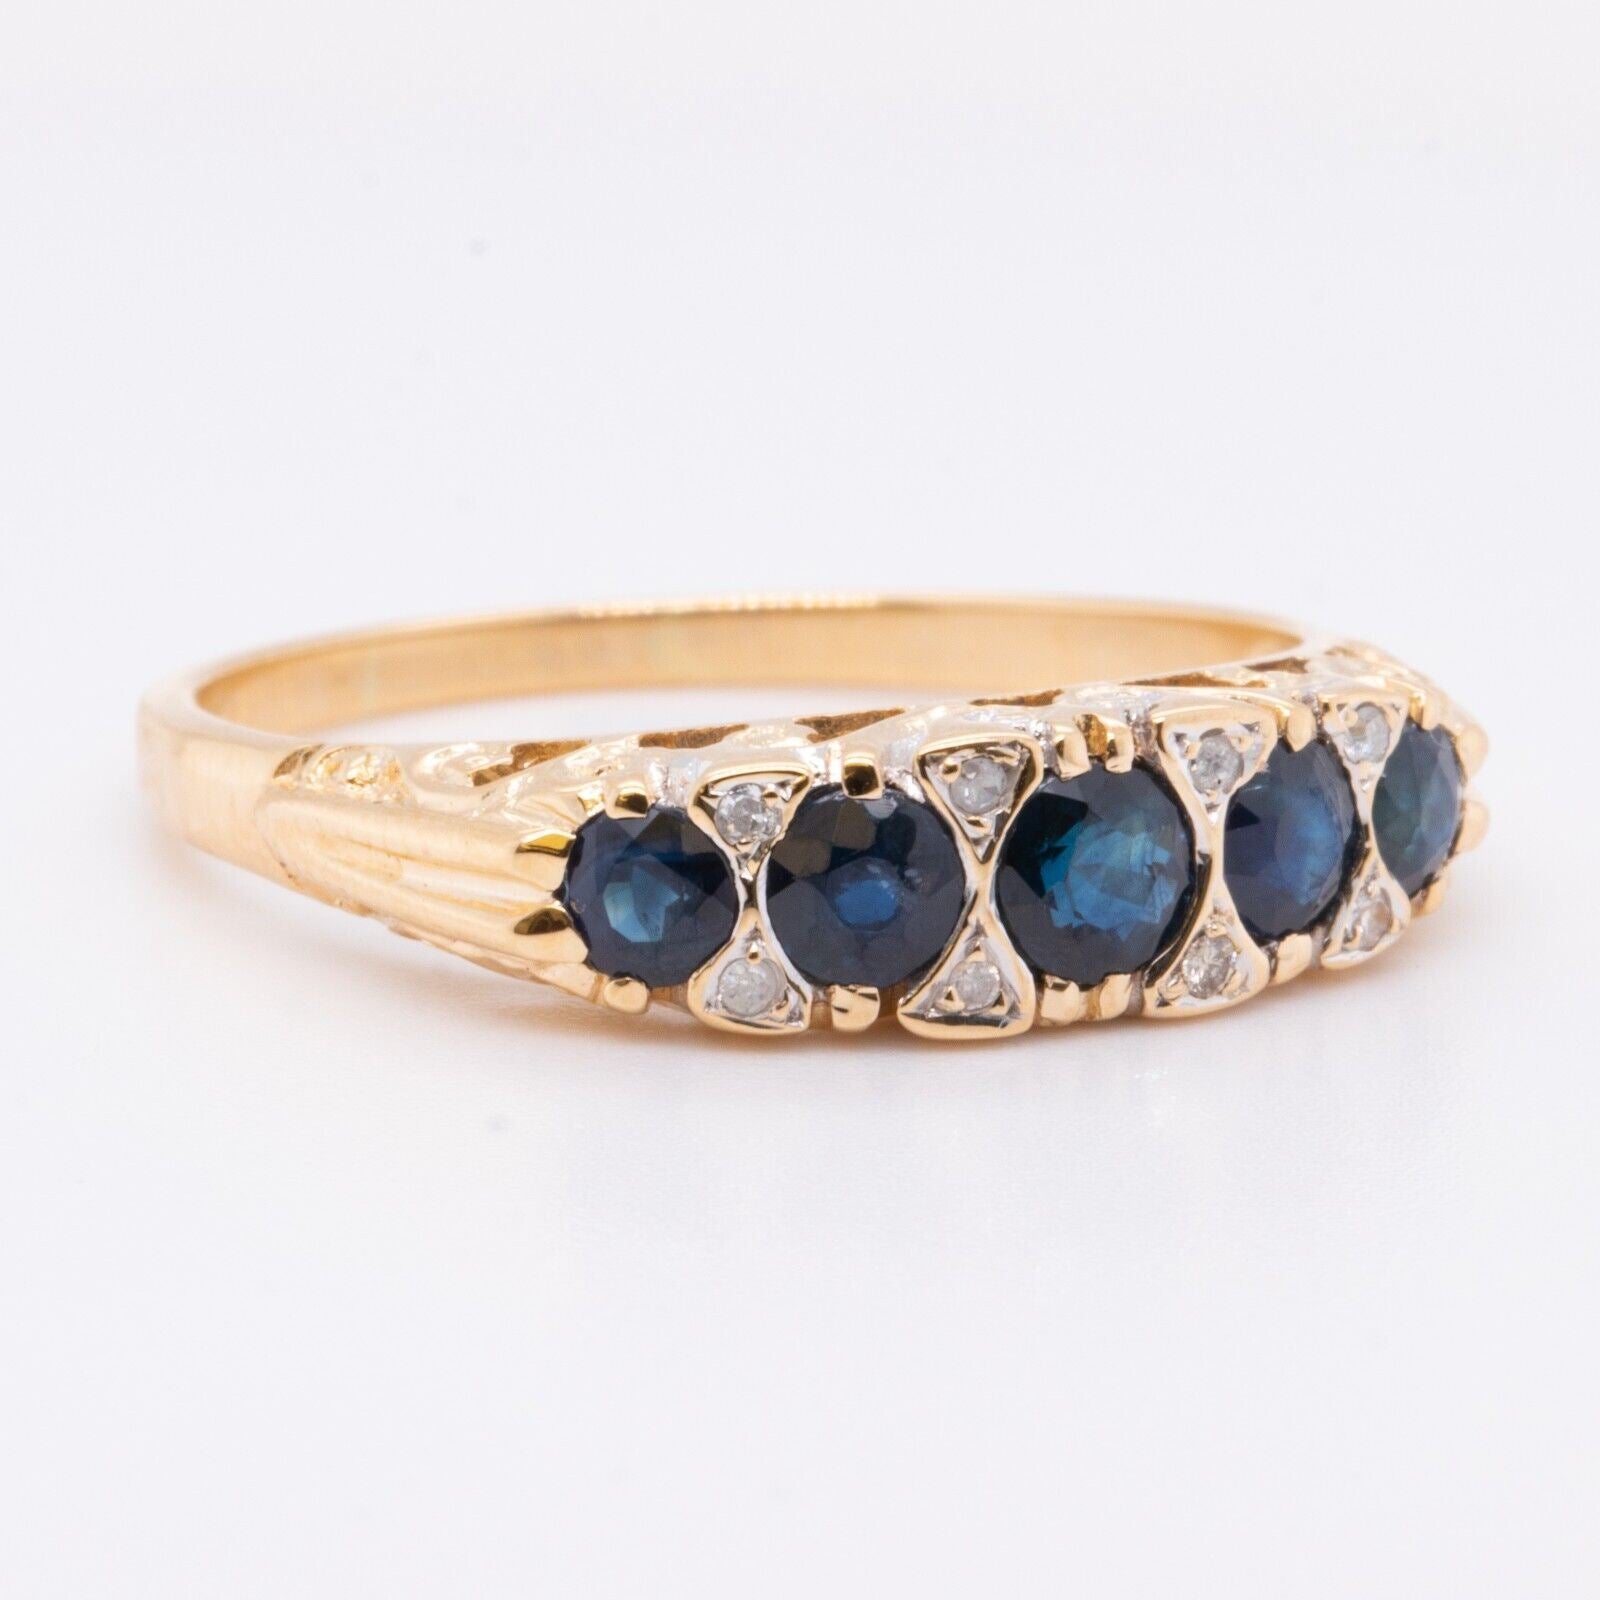 Vintage 14k Yellow Gold 5 Stone Sapphire Diamond Ring 0.73ctw Size 8.75